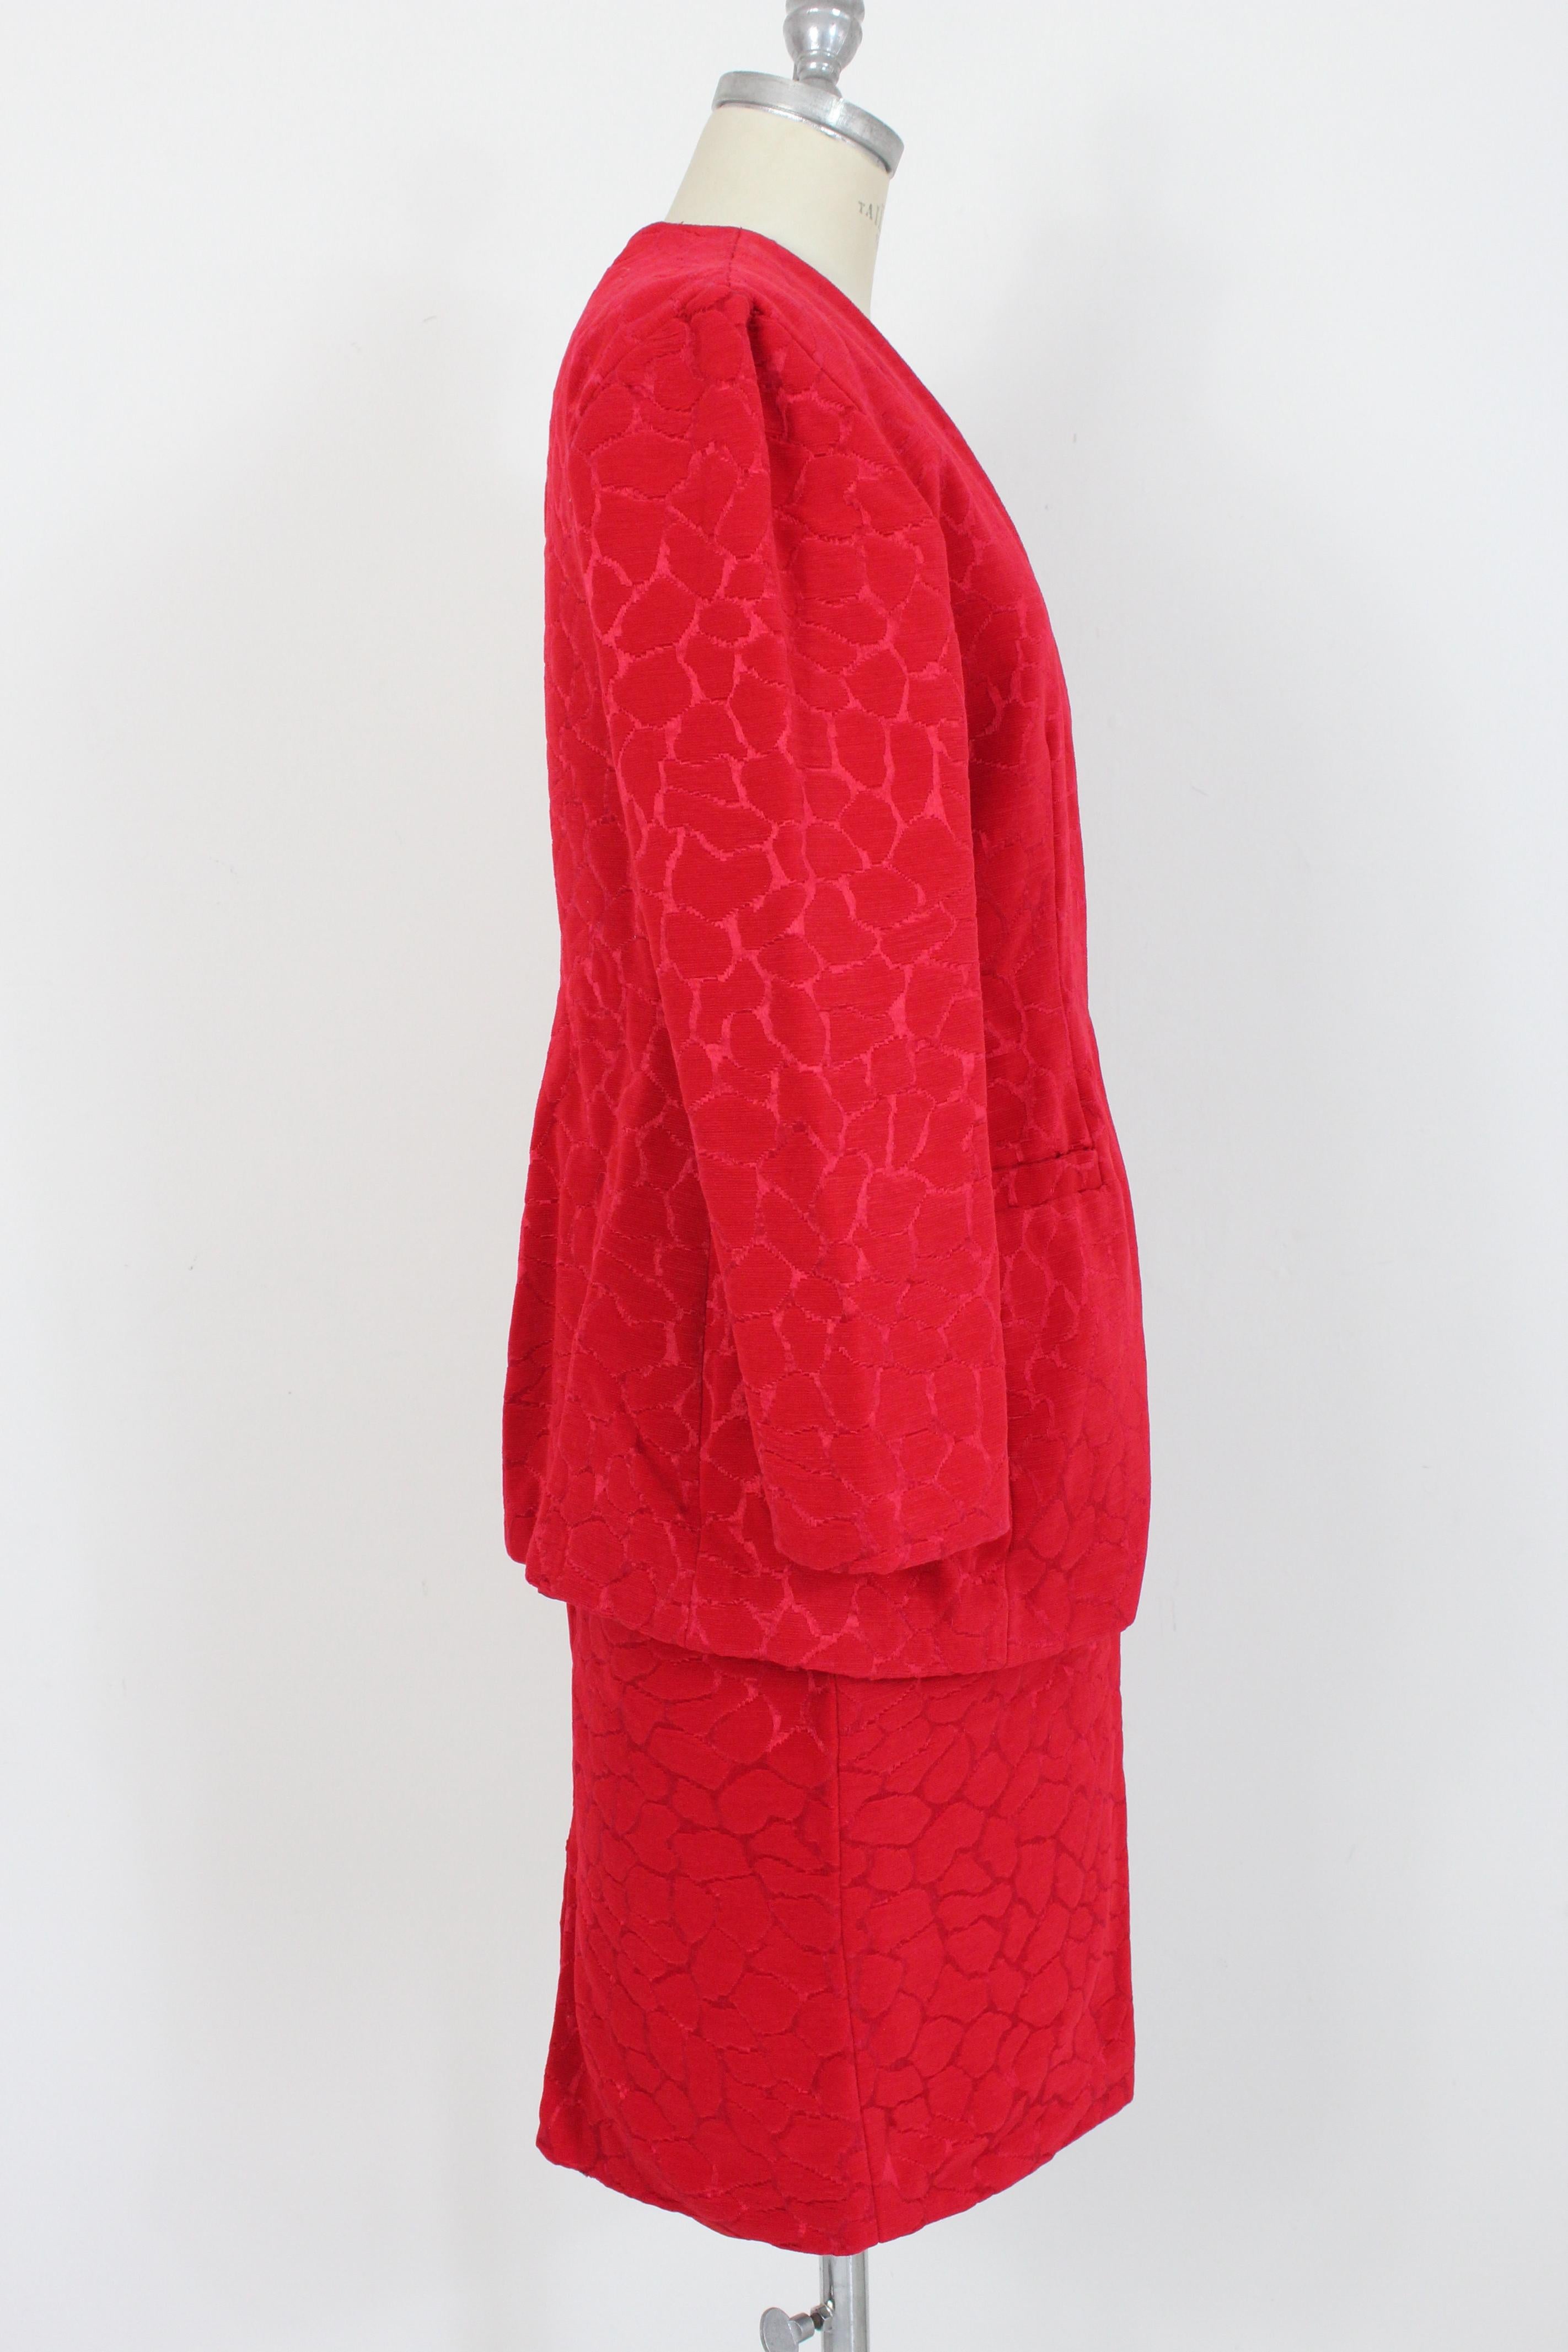 Gai Mattiolo Red Silk Damask Evening Skirt Suit In Excellent Condition In Brindisi, Bt